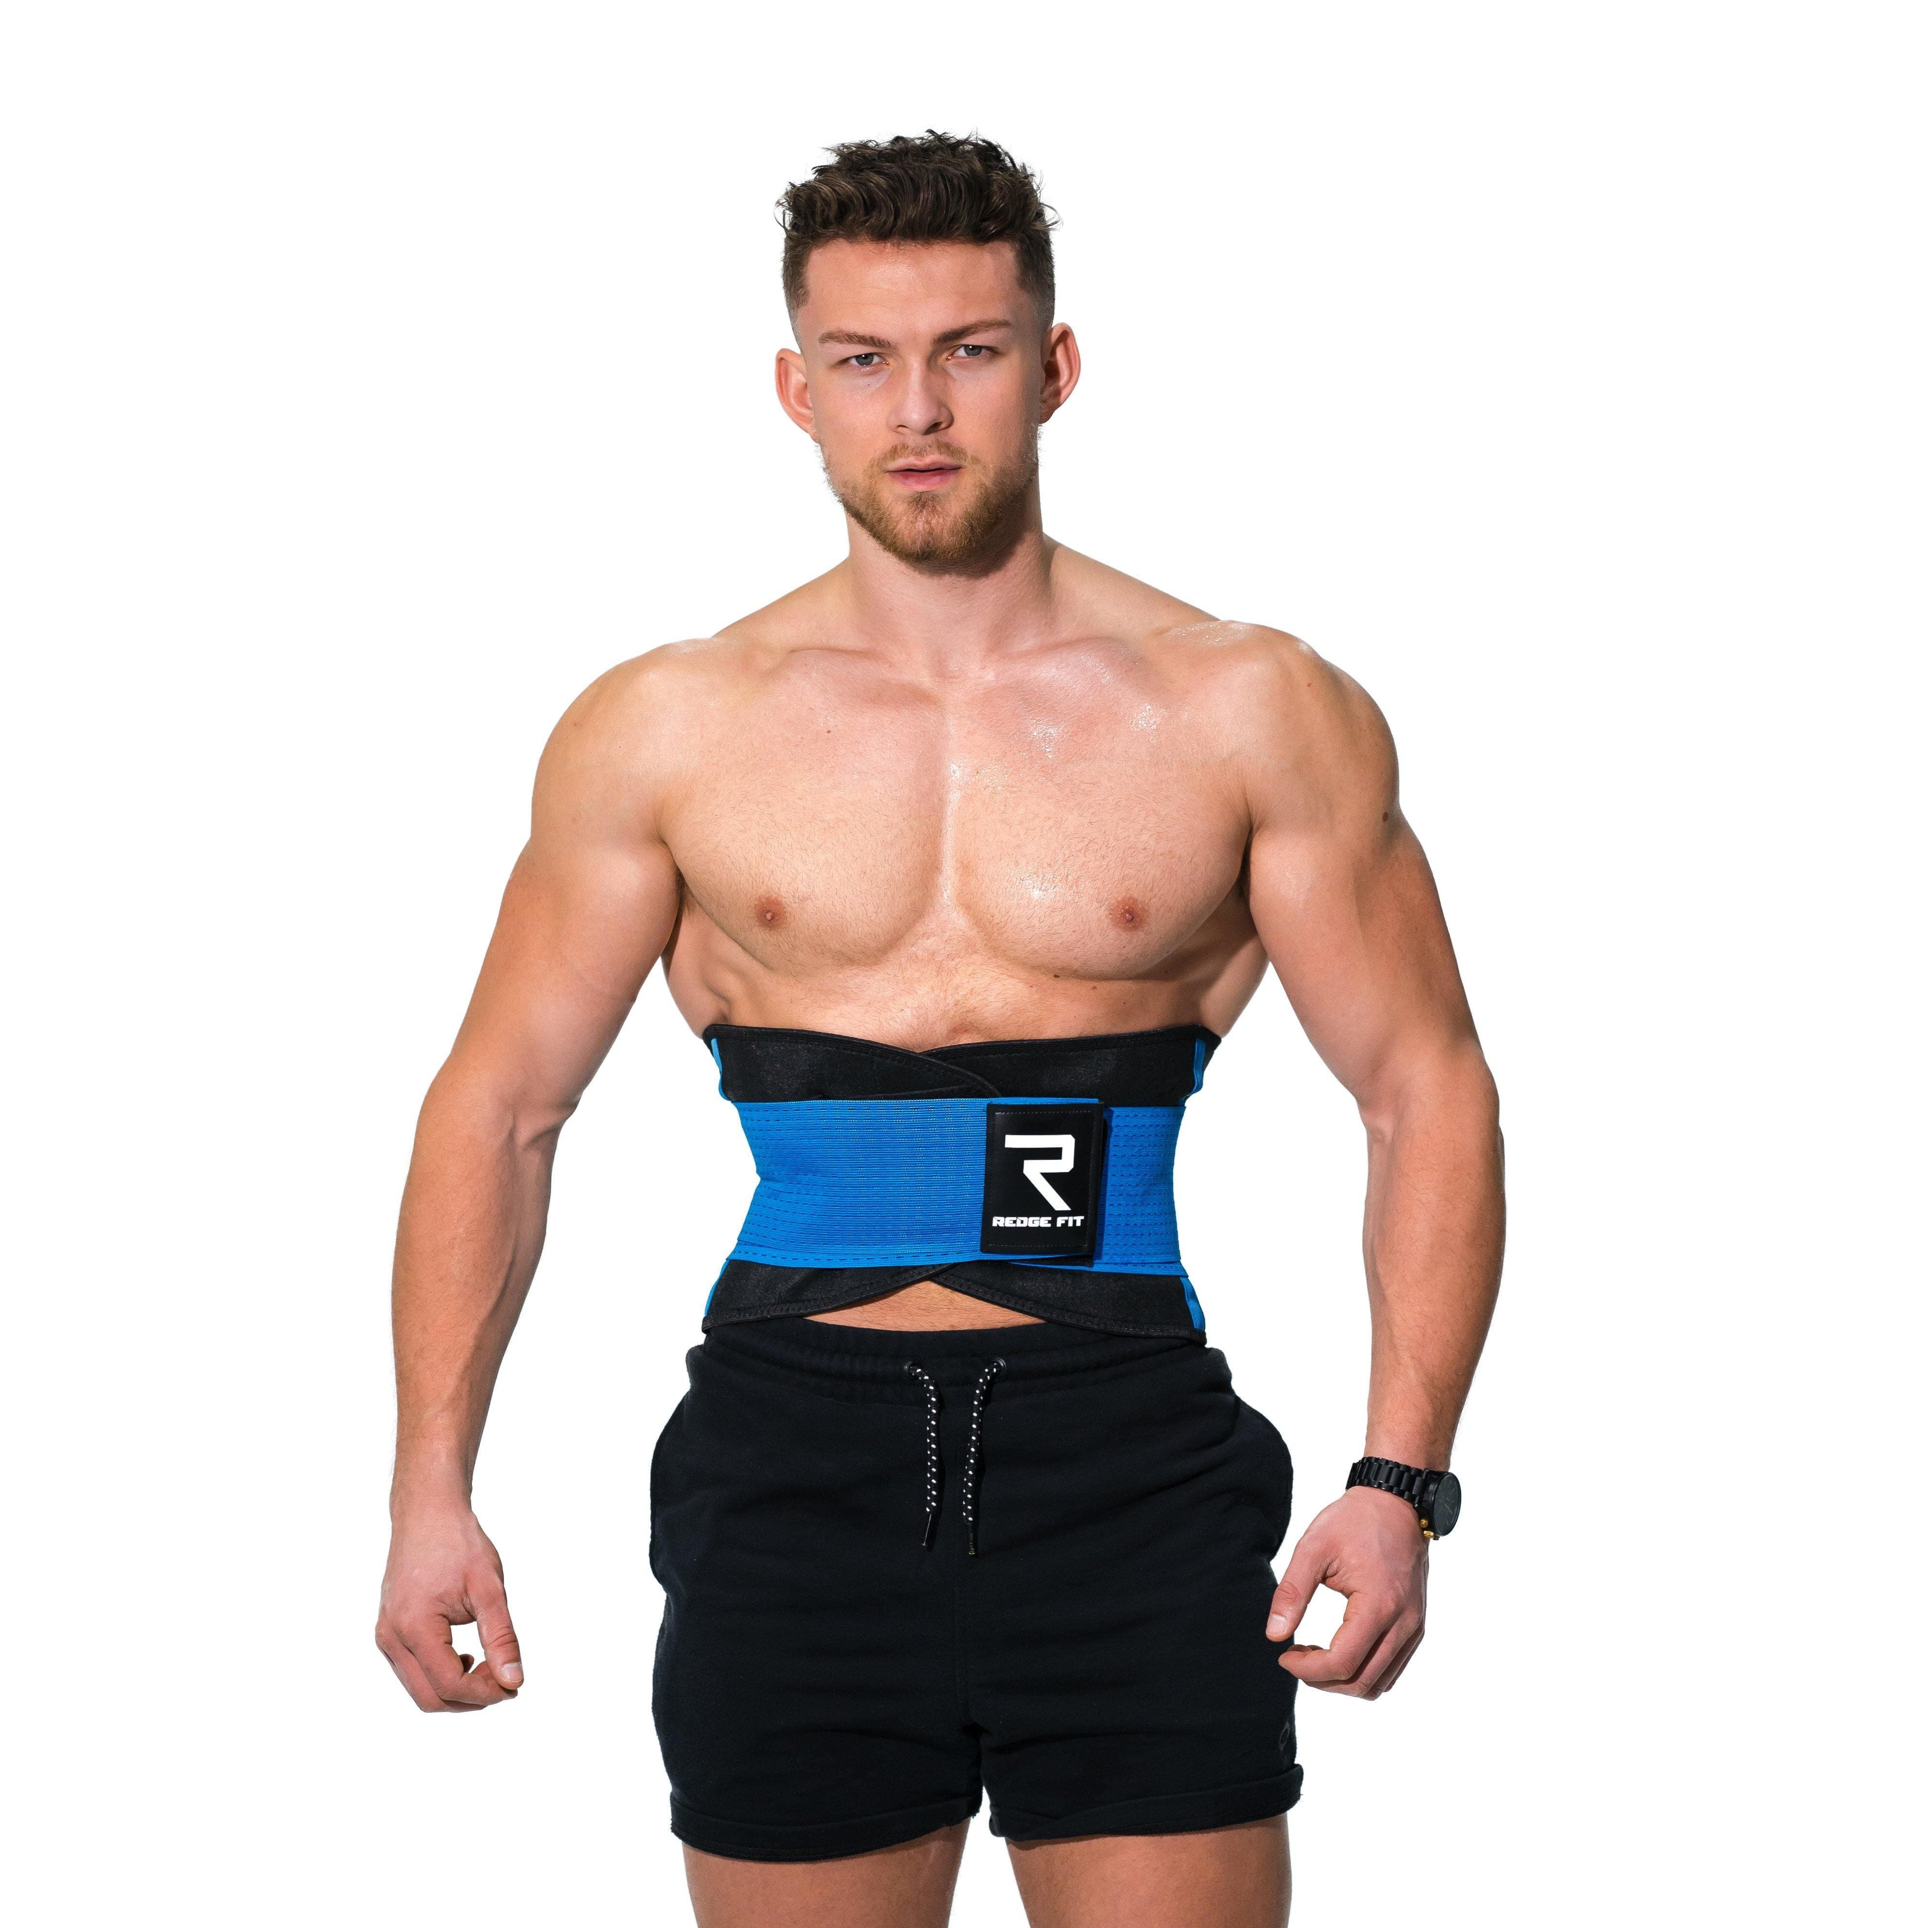 Men Slimming Belt Waist Trimmer Belt Muscle Abdomen Shaper - Size M (Black)